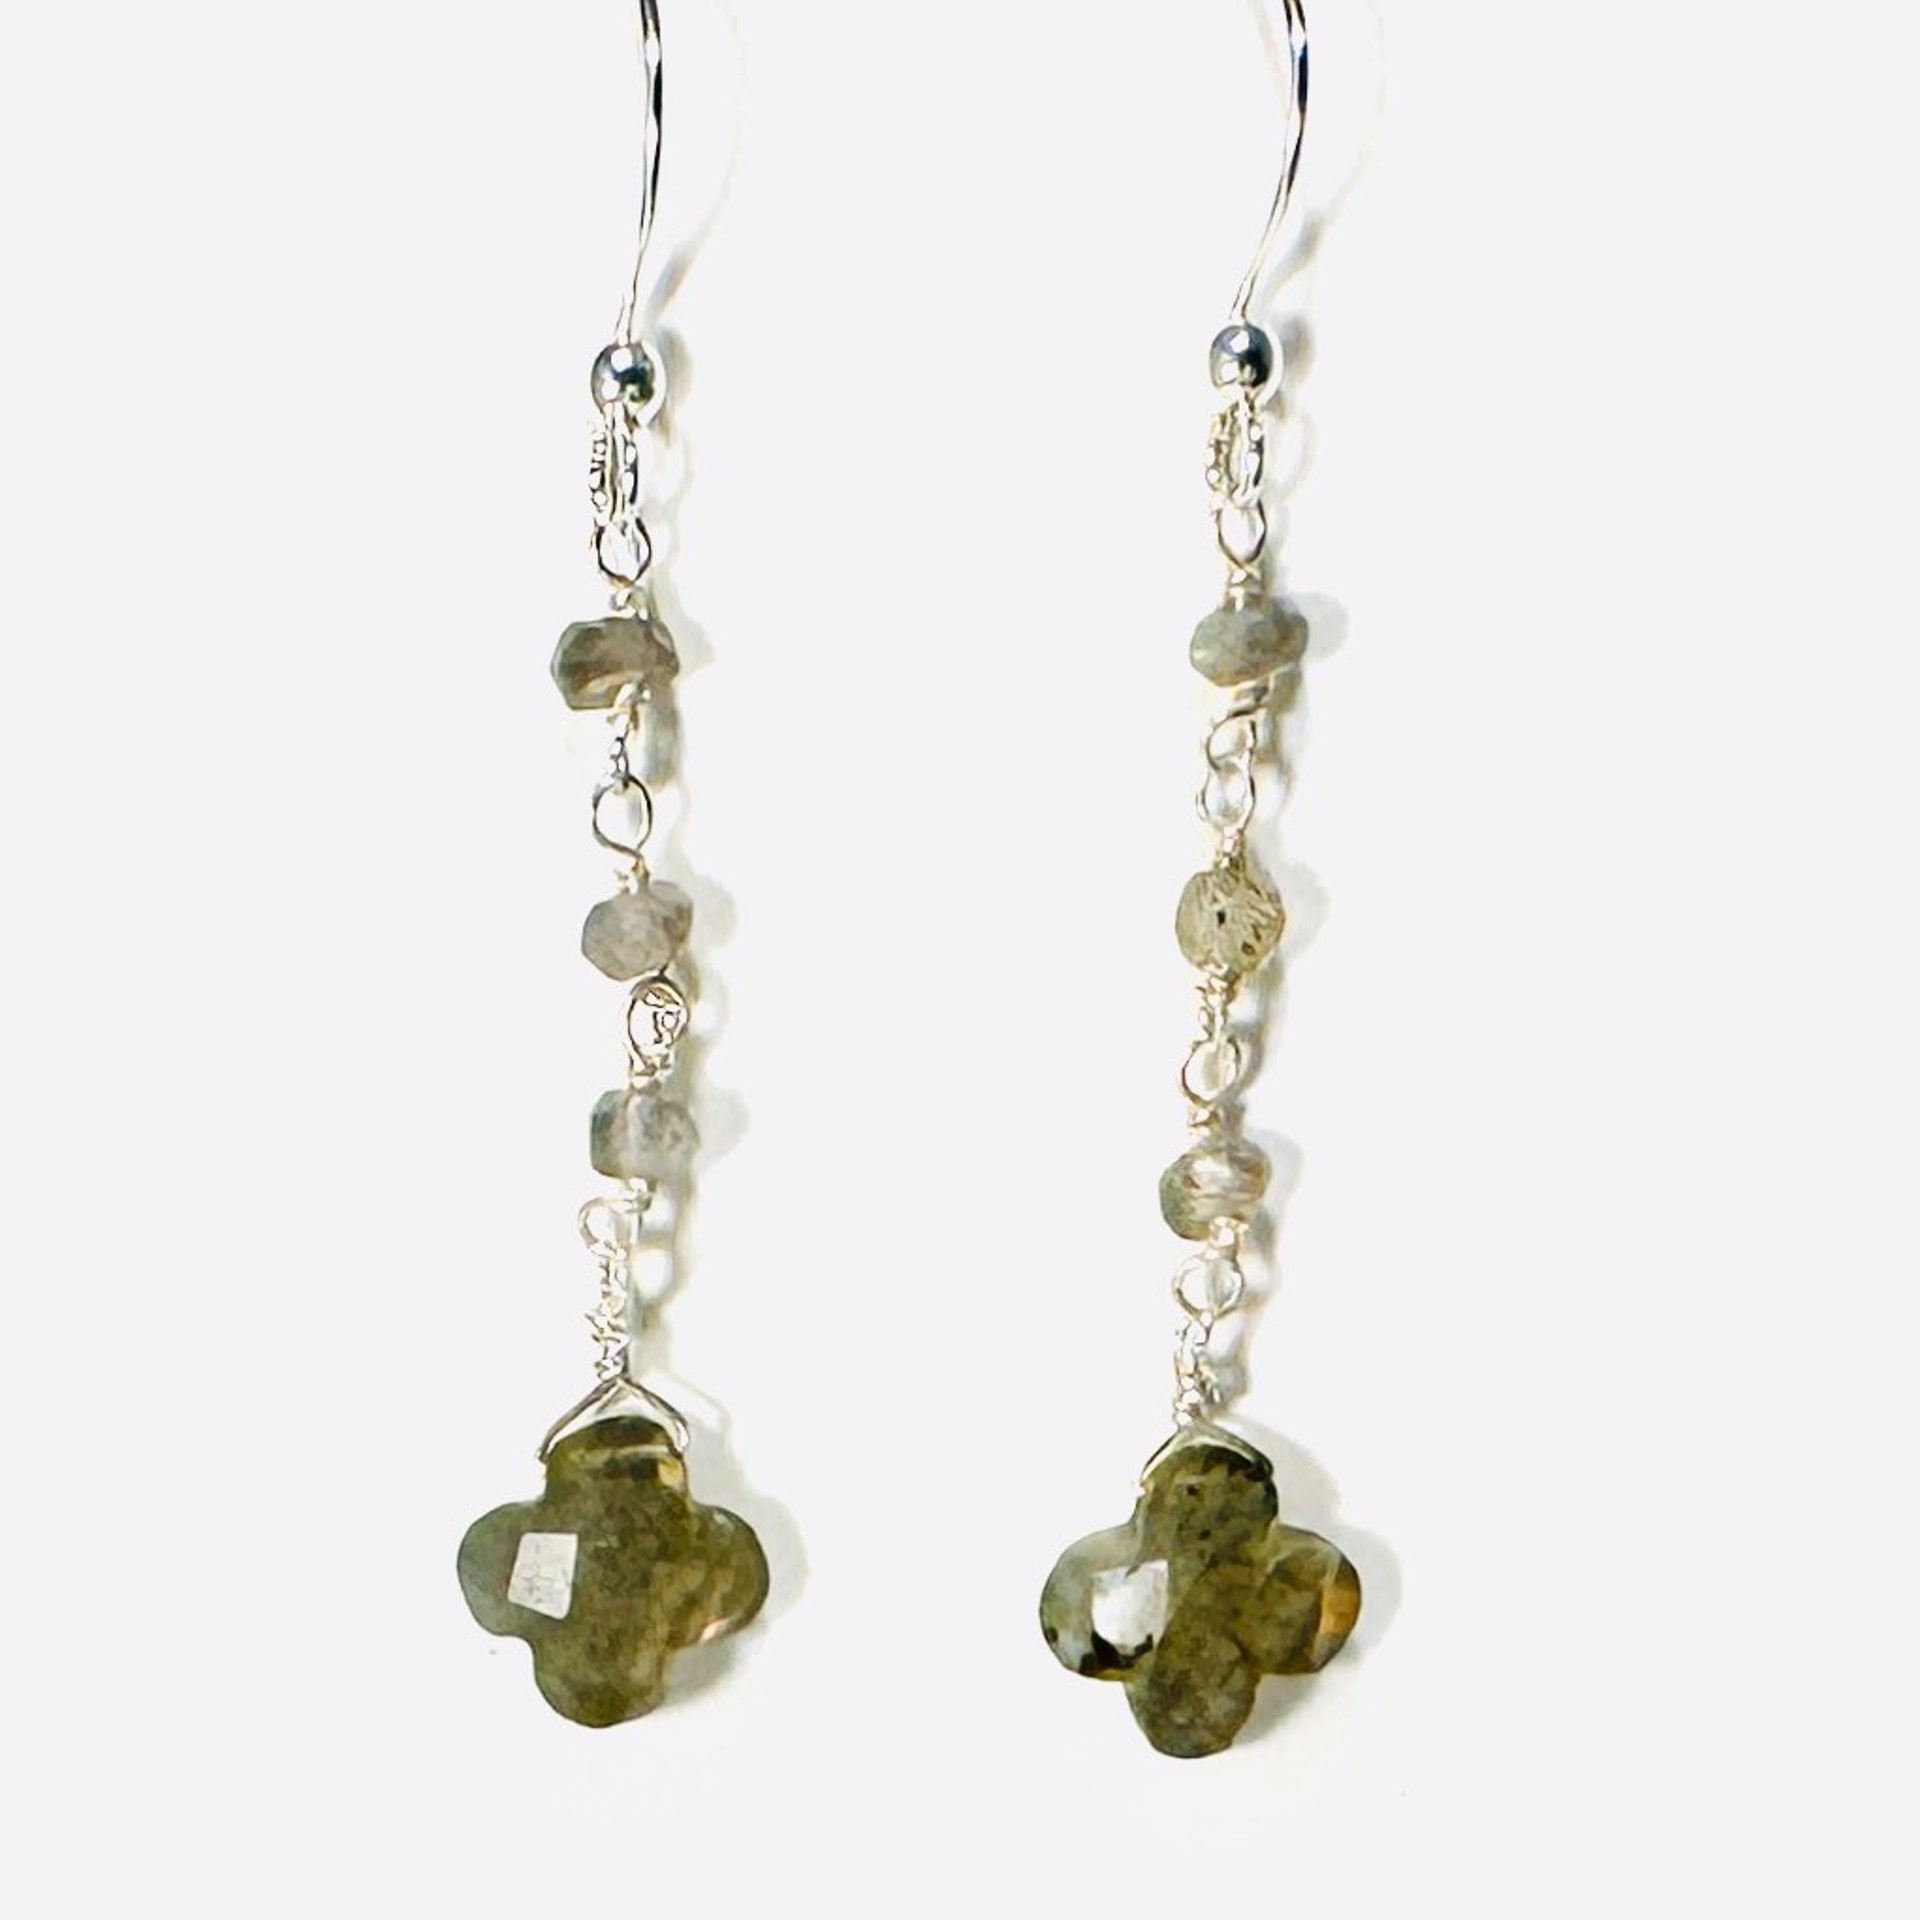 Labradorite Clover, Labradorite Silver Chain Earrings LR24-16 by Legare Riano